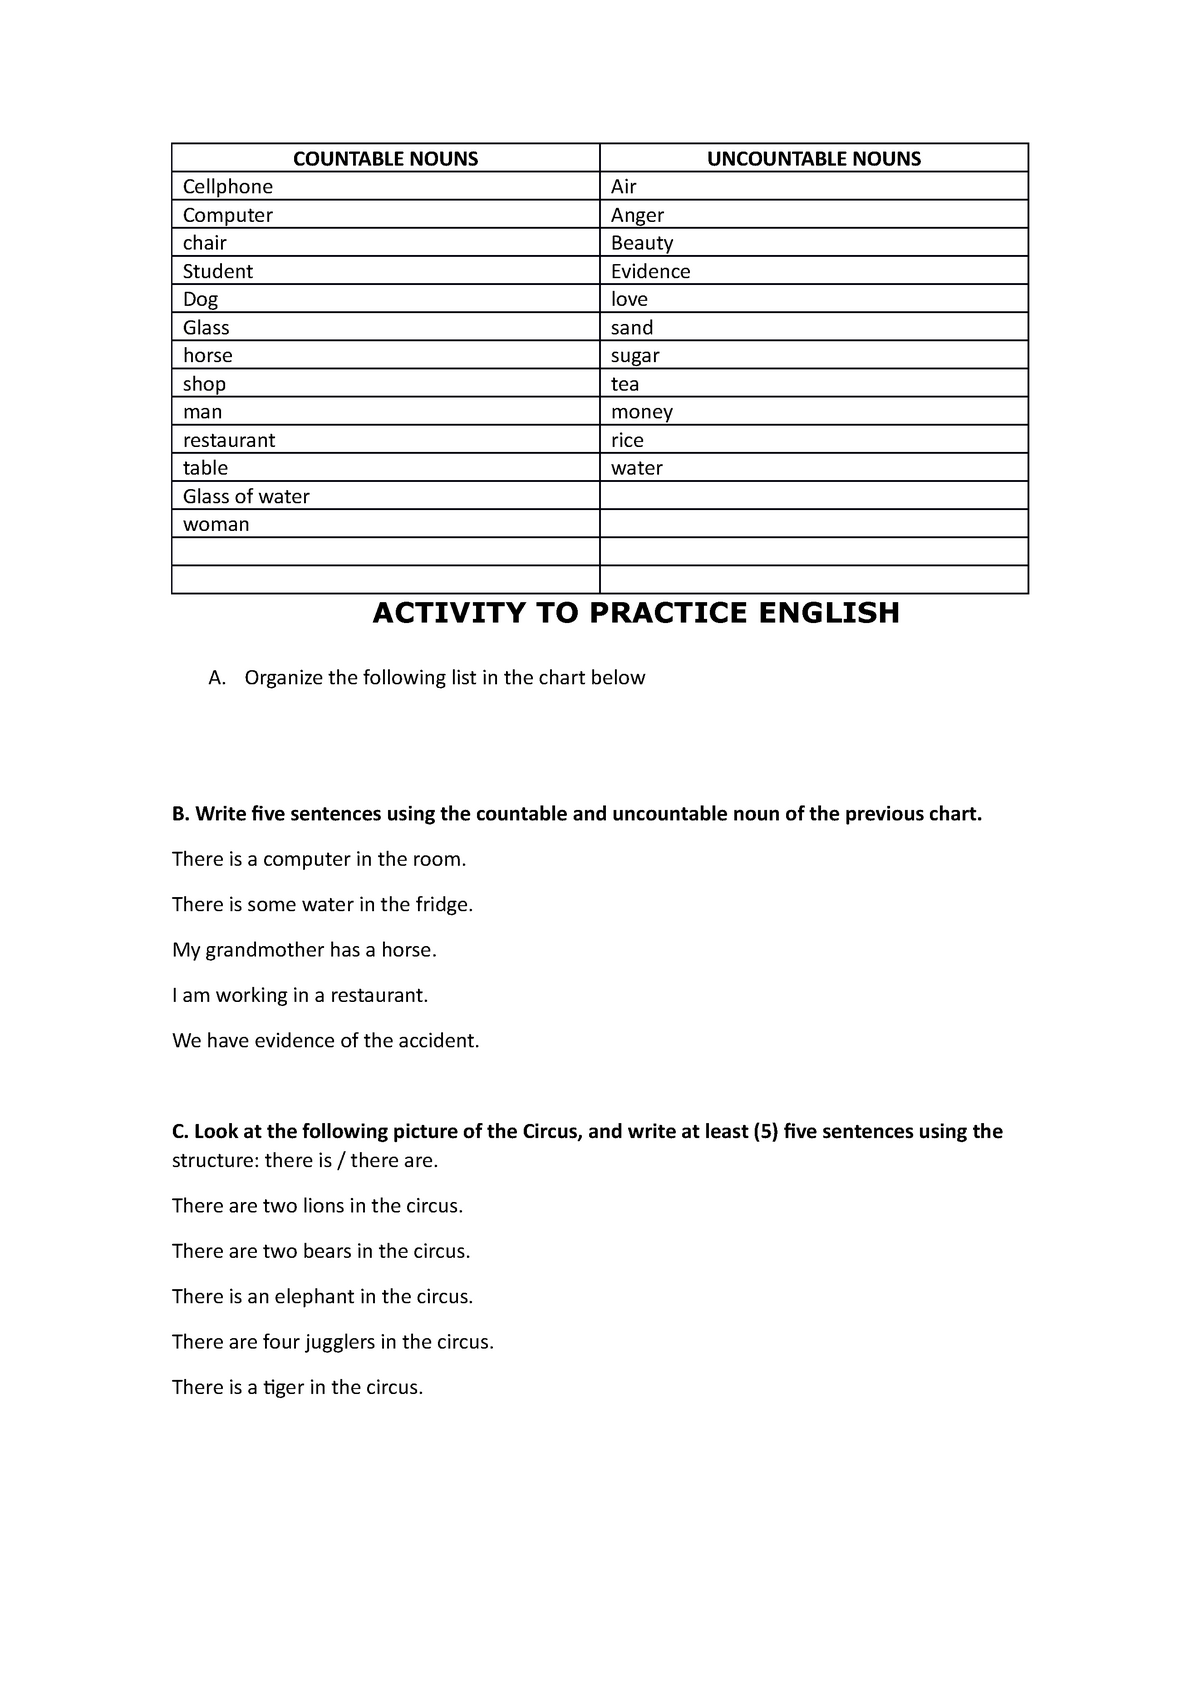 activity-to-practice-english-ingles-unad-studocu